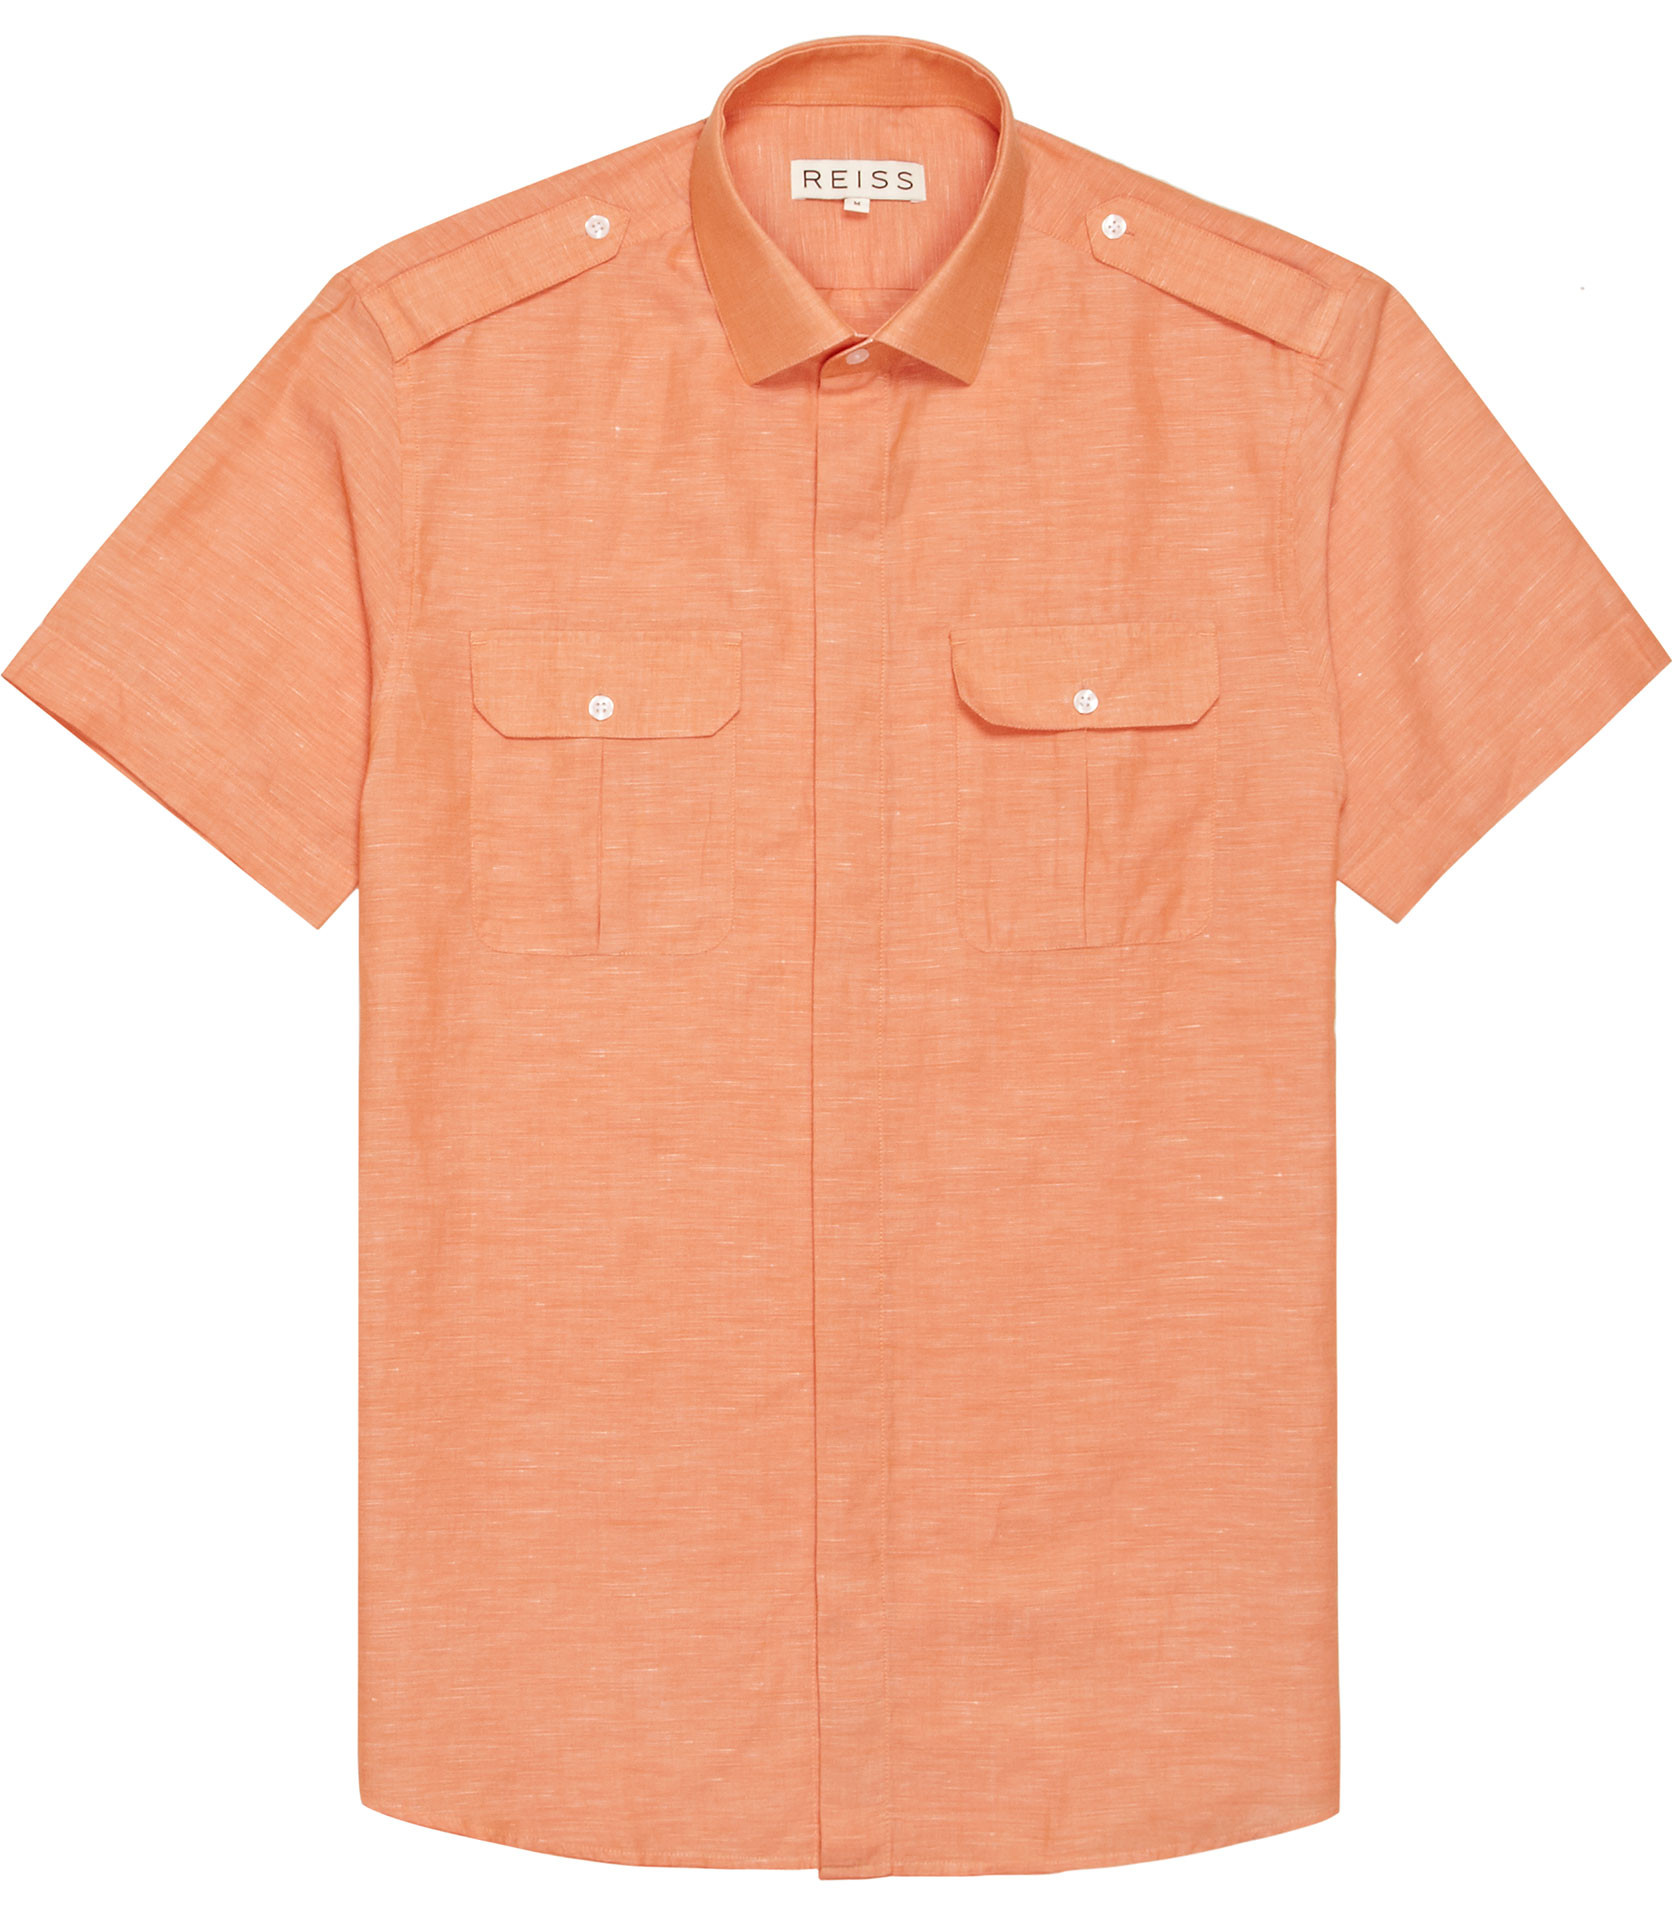 safari shirt orange